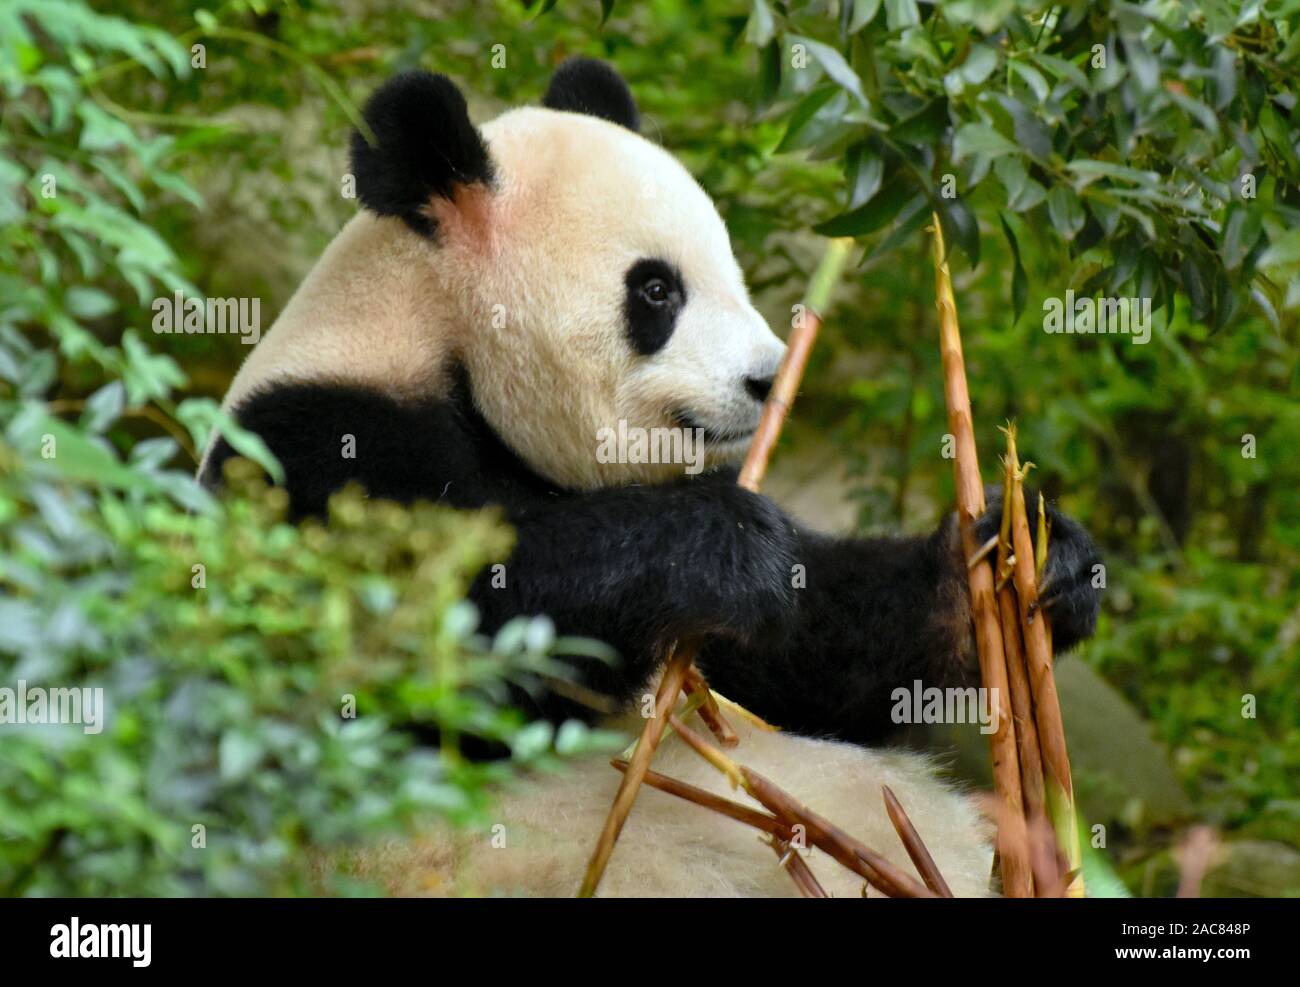 Lindo oso panda comiendo bambú en bosque, Chengdu, China Foto de stock